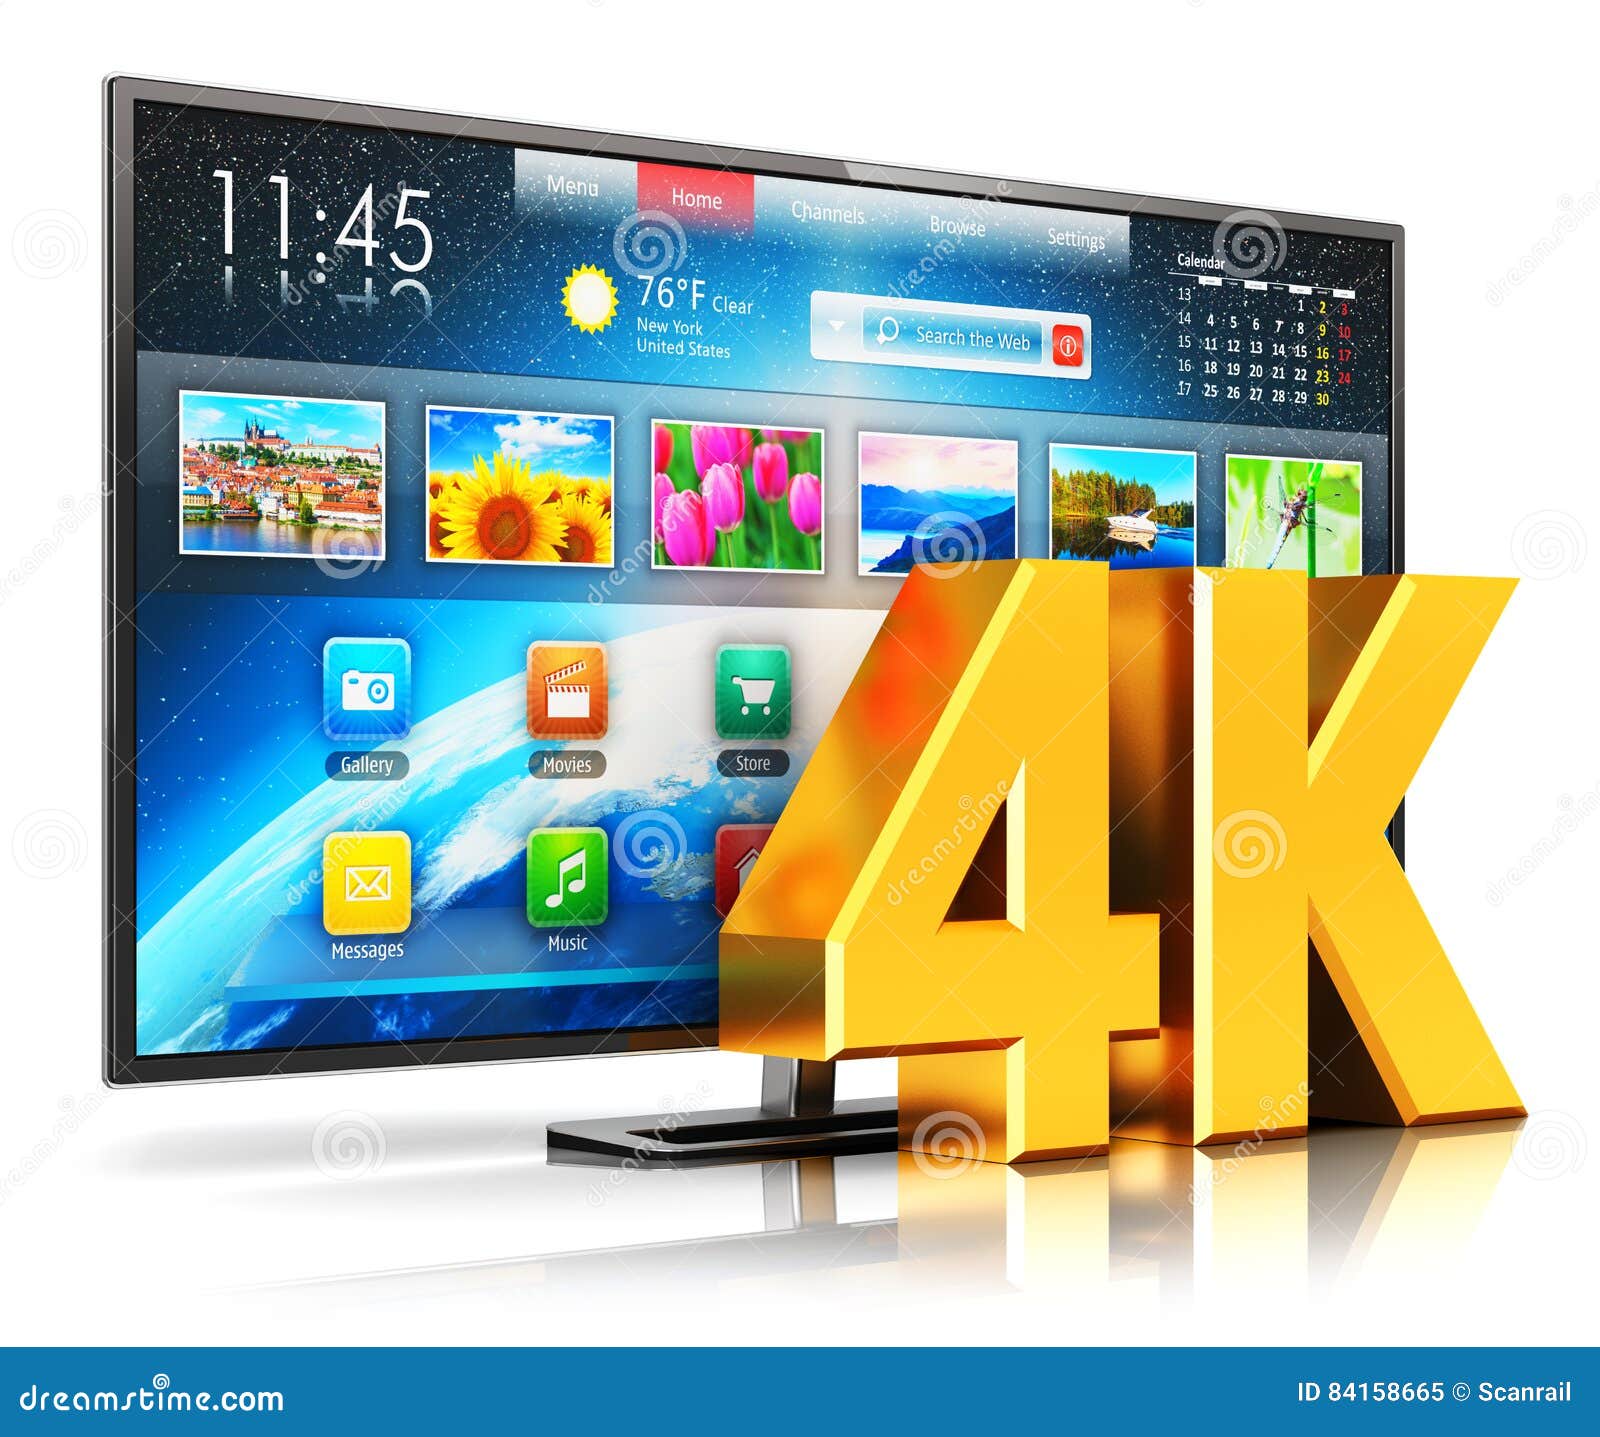 4k ultrahd smart tv